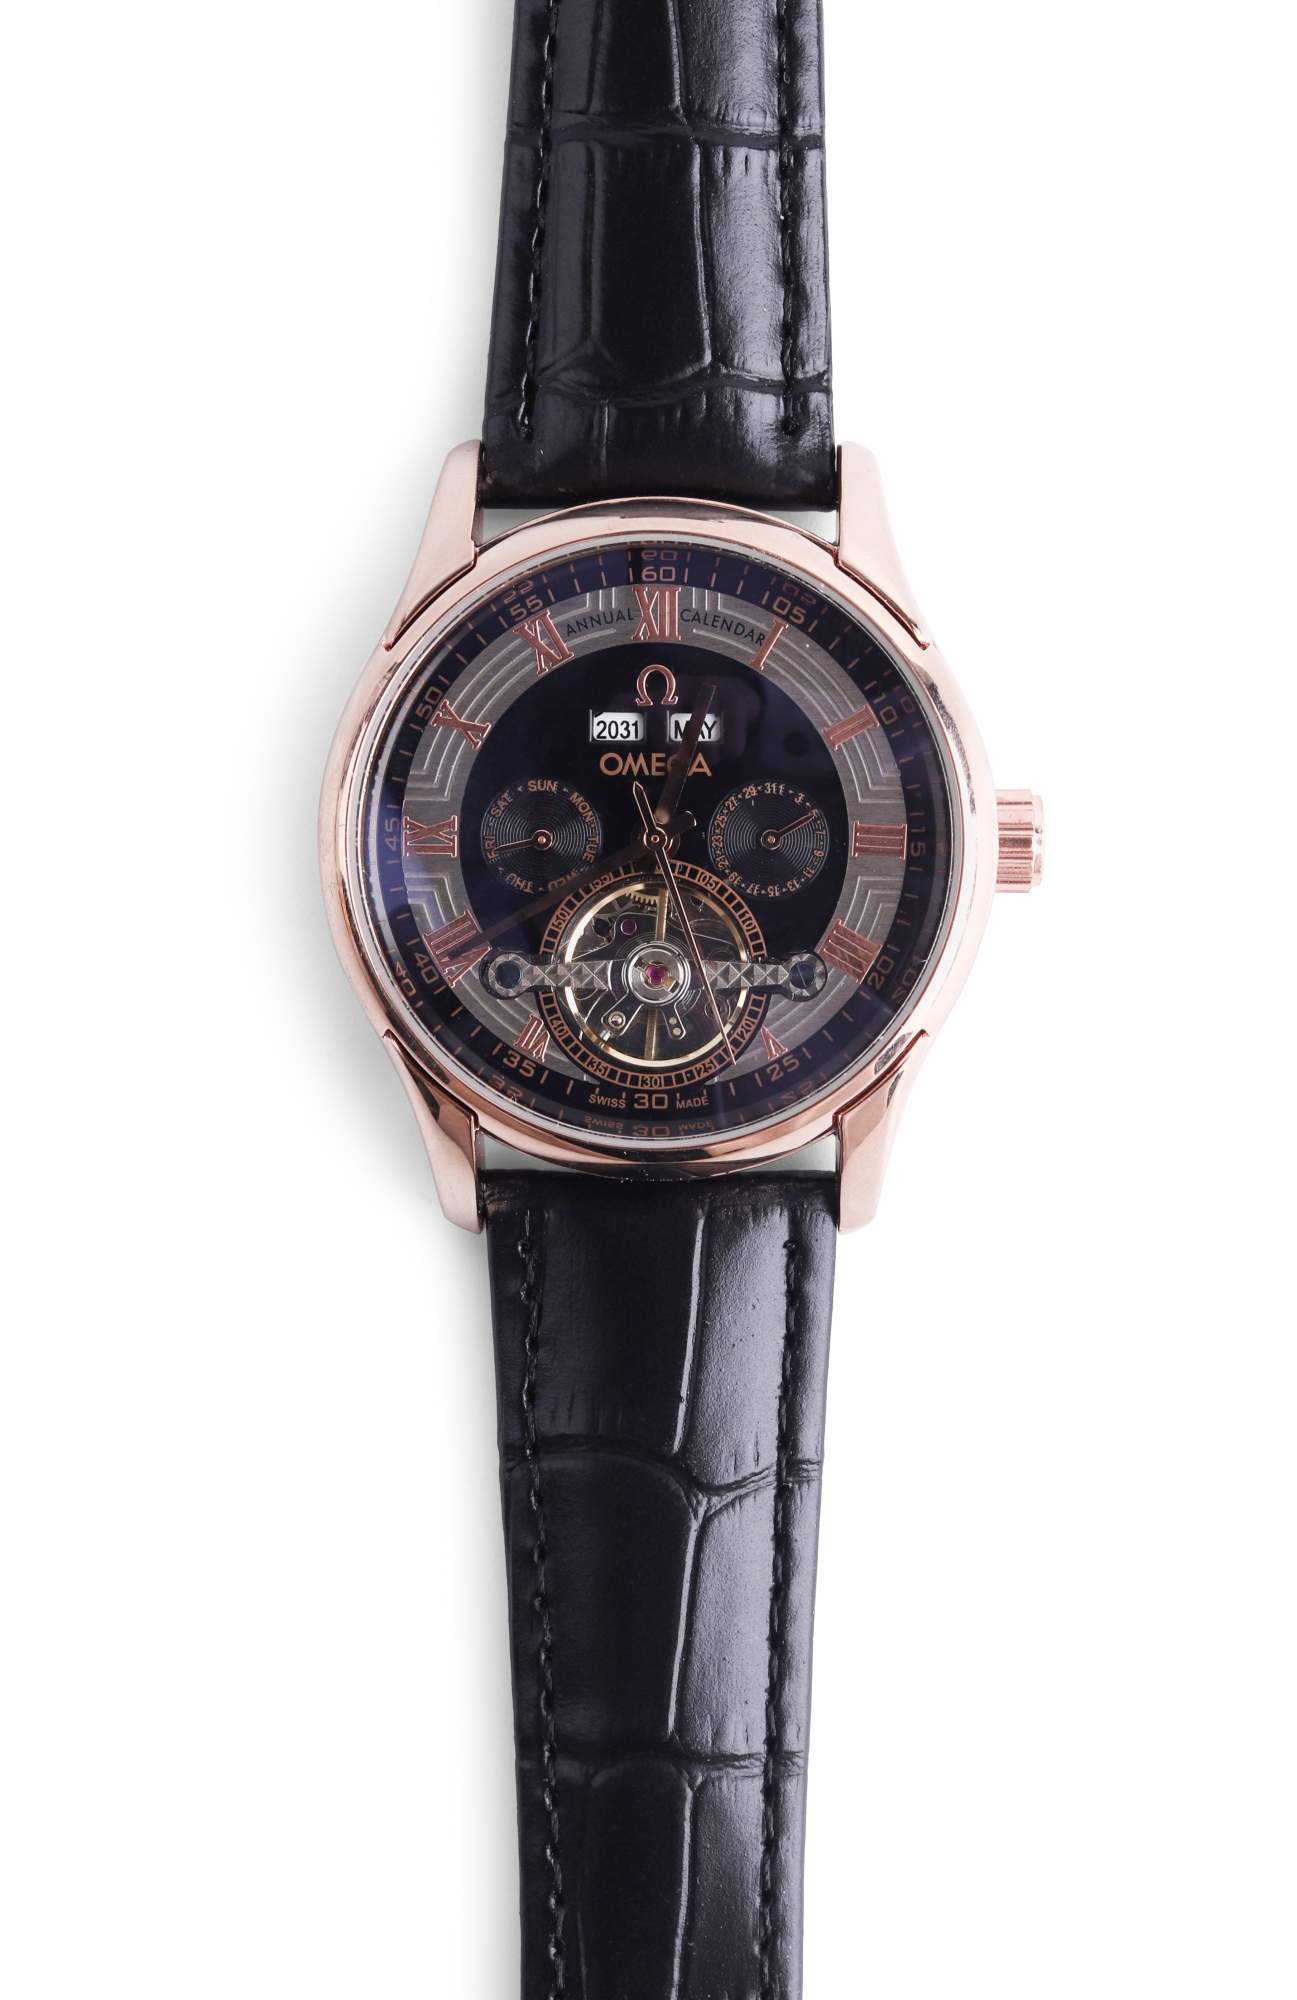 Наручные часы мужские Omega Omg-170 - купить, цены на Мегамаркет